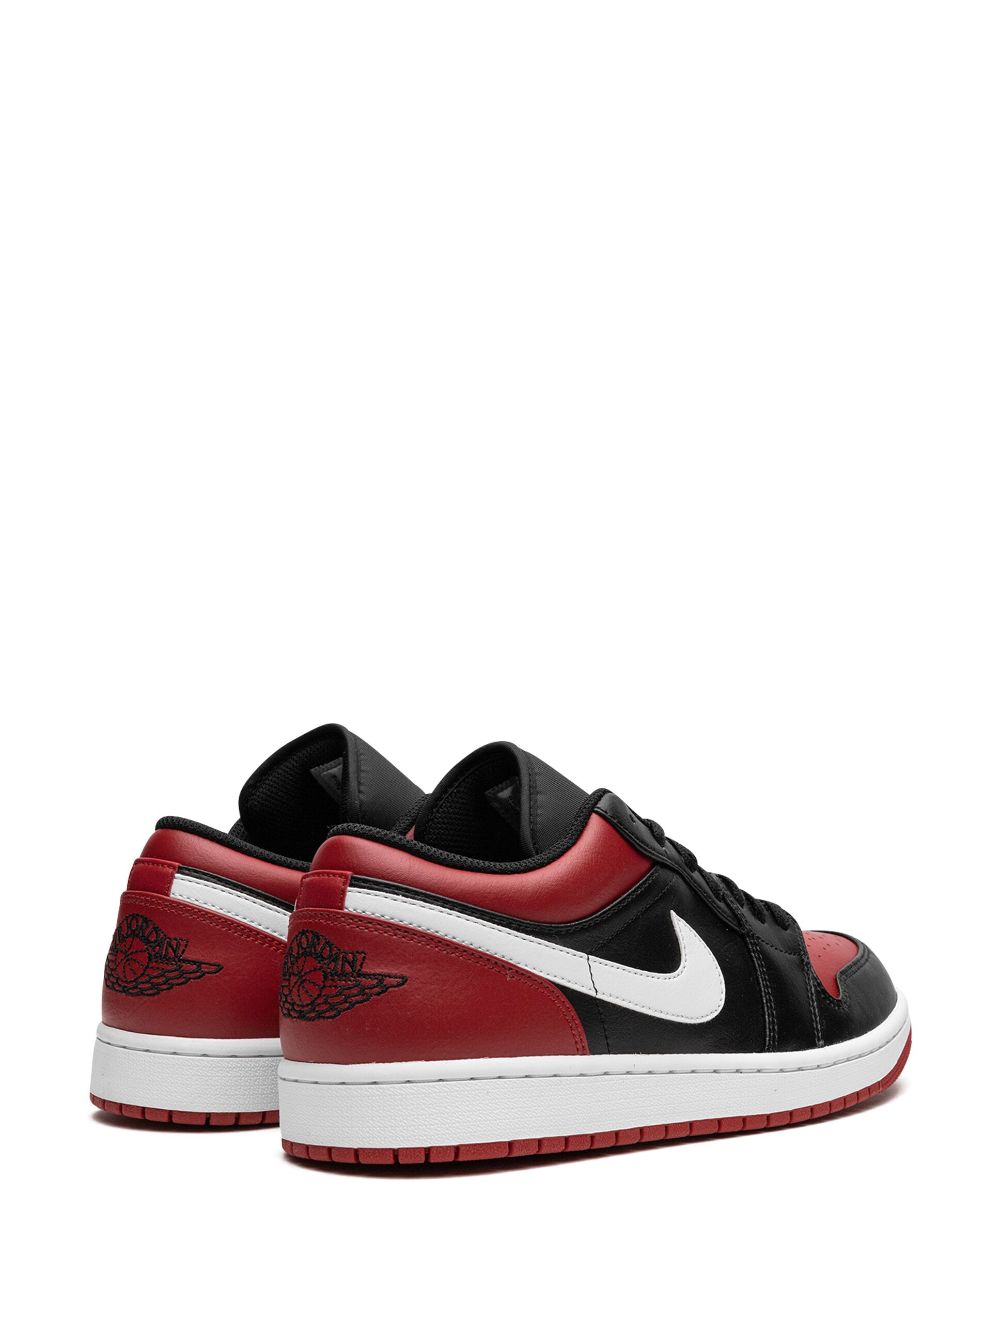 Shop Jordan 1 Low "alternate Bred Toe" Sneakers In Red